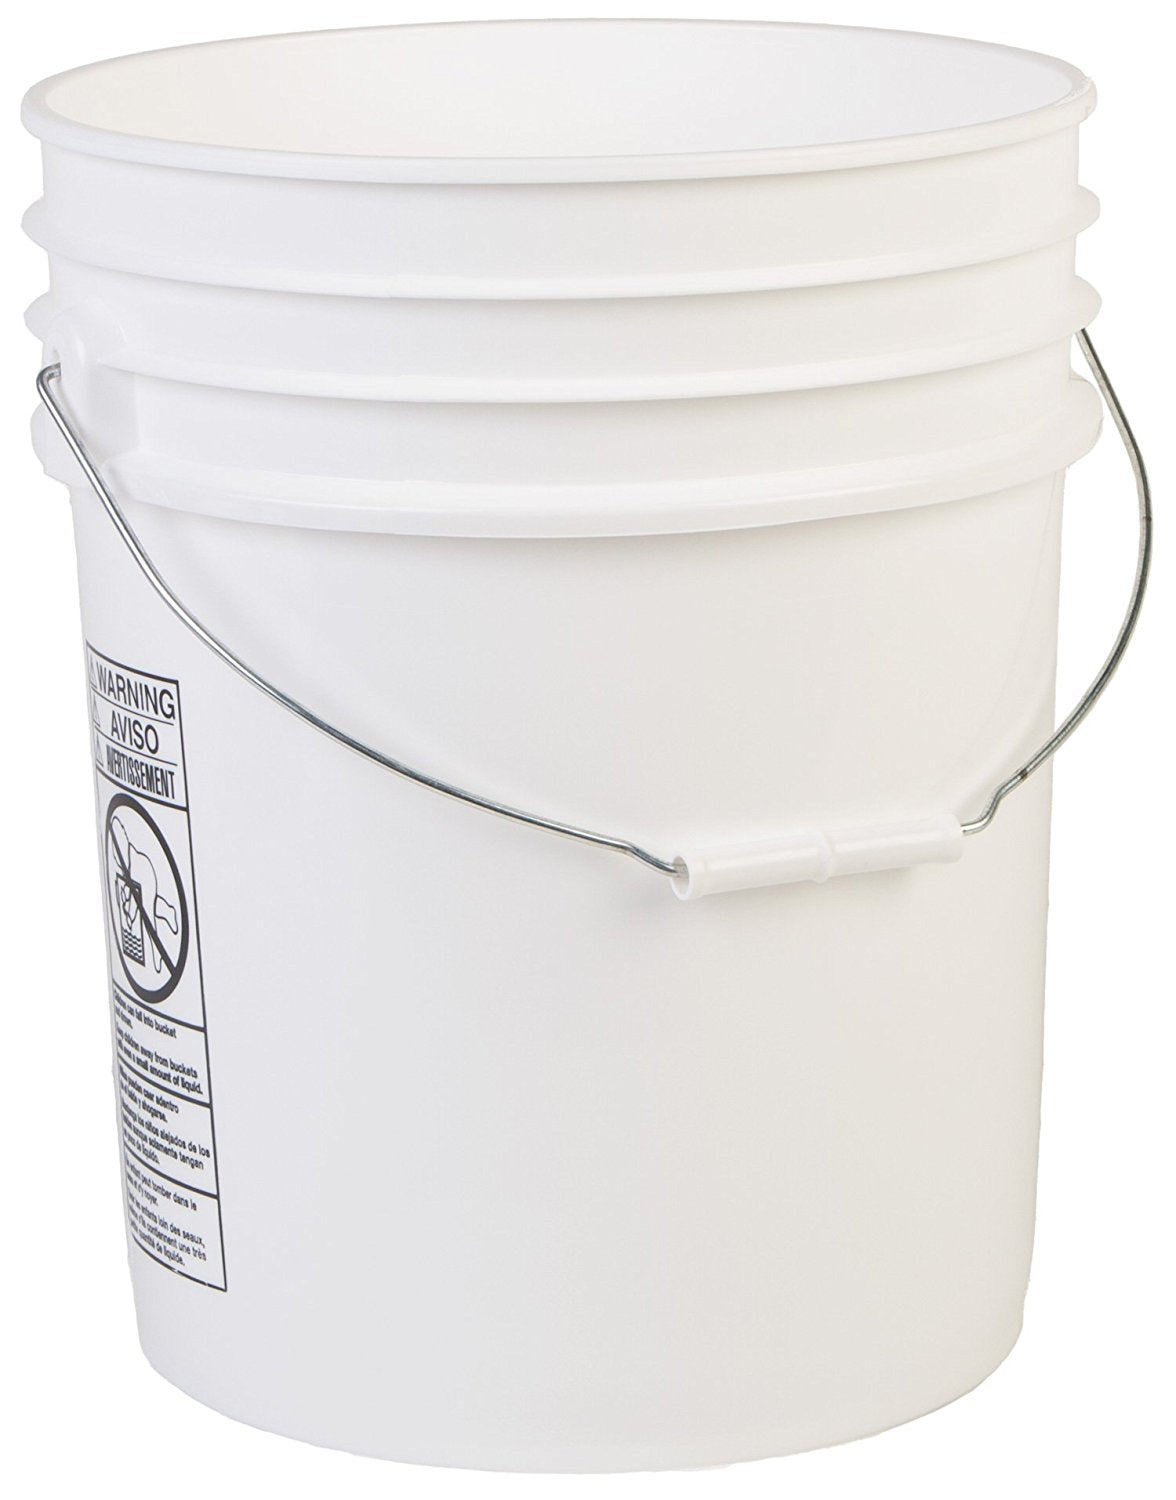 Pailshop.com | Premium 5 Gallon Buckets and Lids | Same Day Shipping